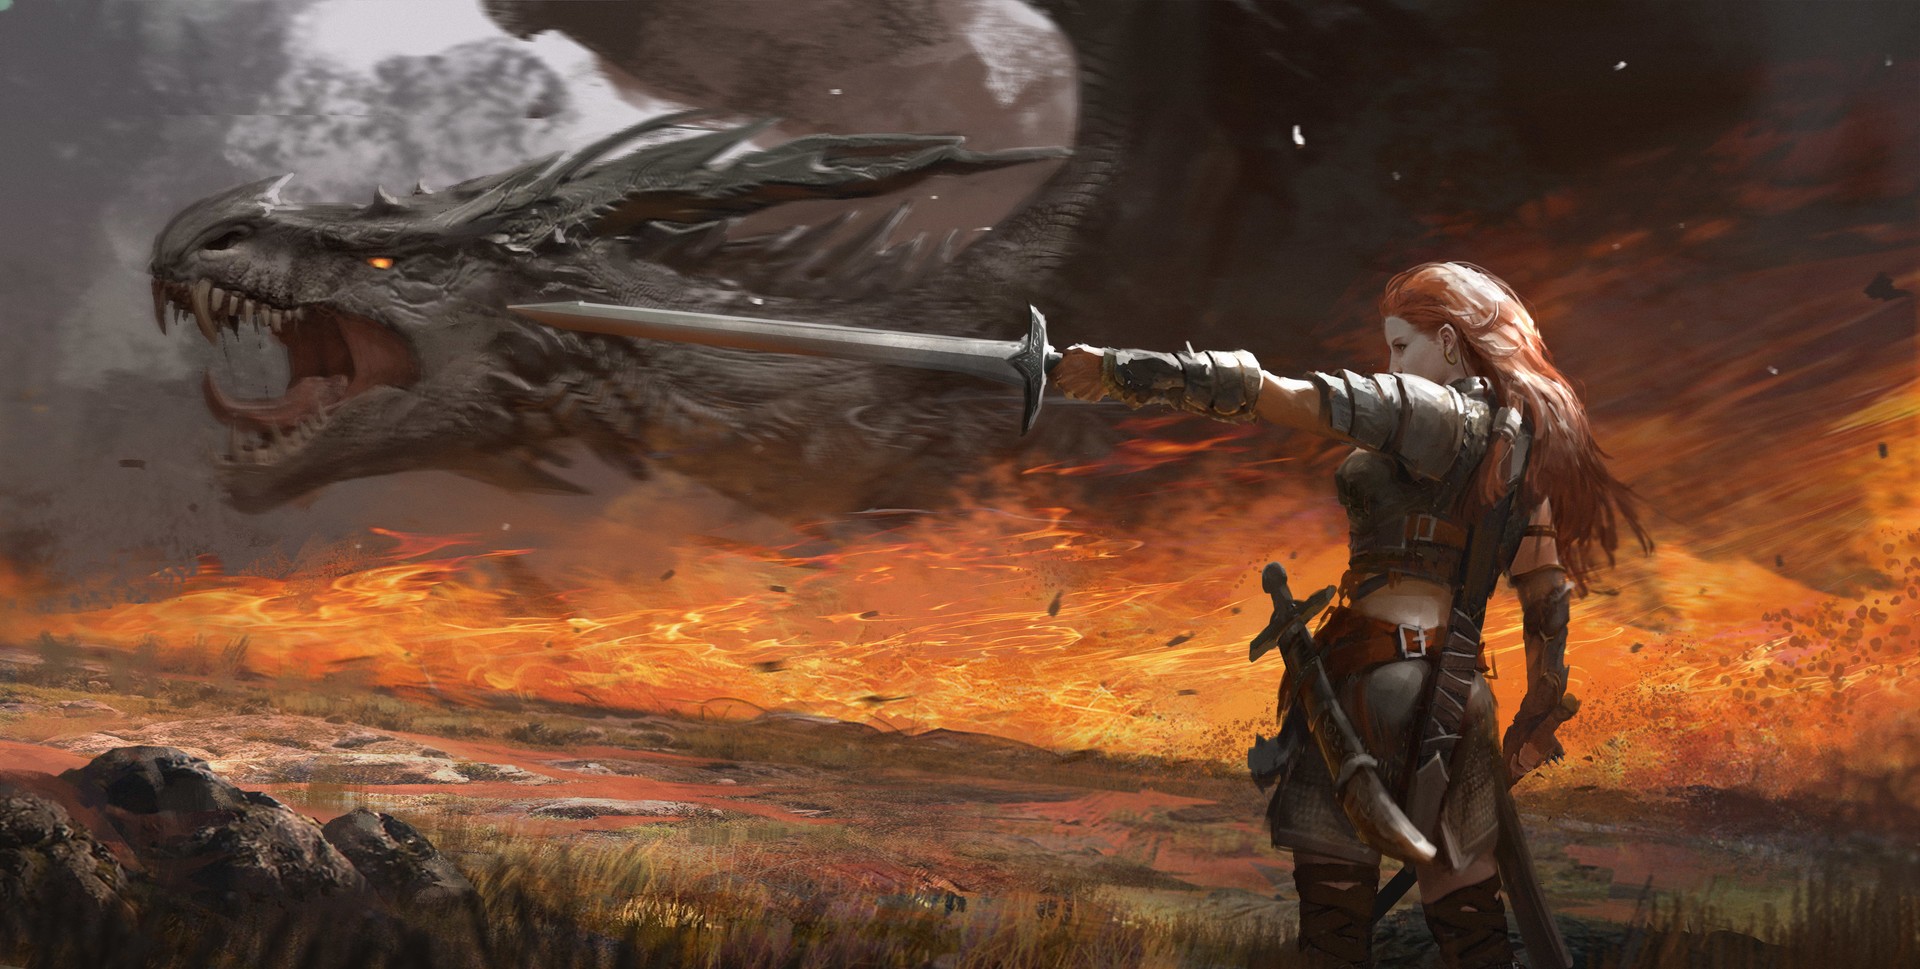 General 1920x969 fantasy art dragon fantasy girl sword redhead armored glowing eyes creature